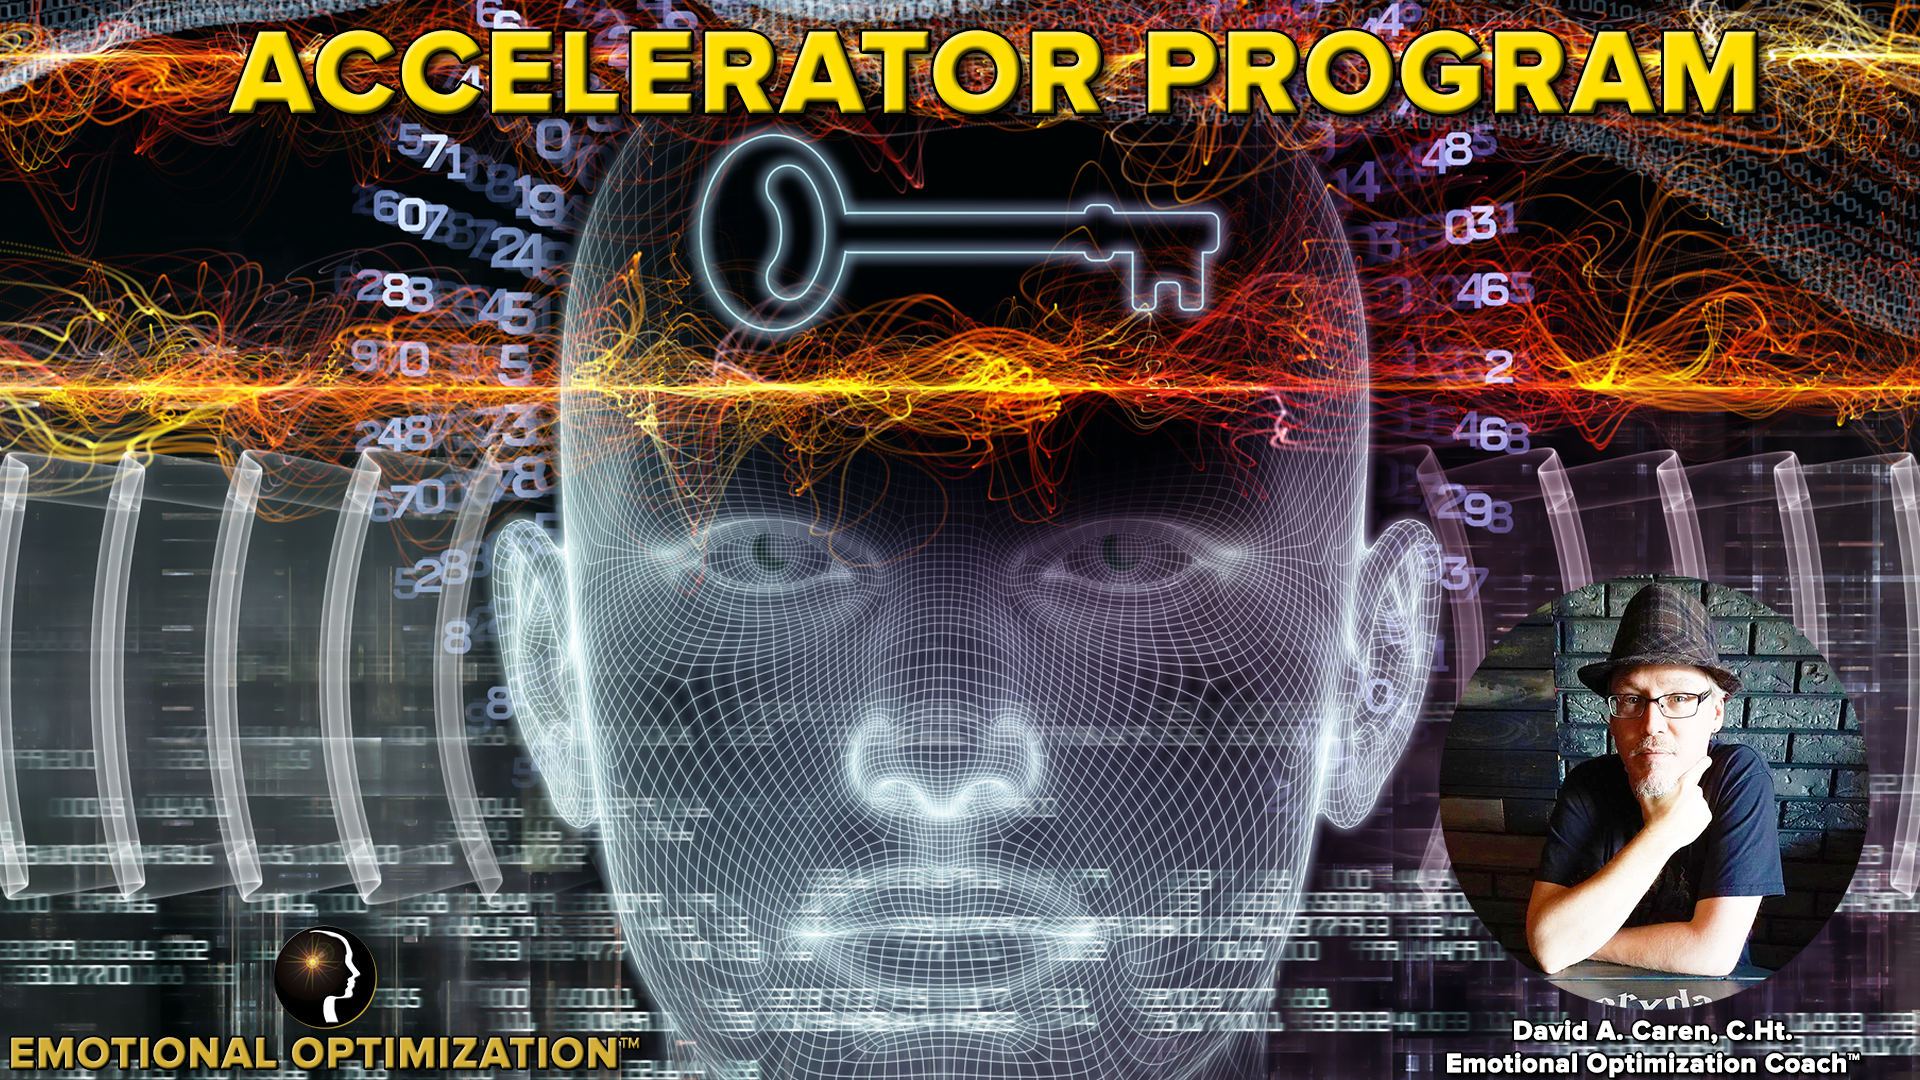 Emotional Optimization Accelerator Program